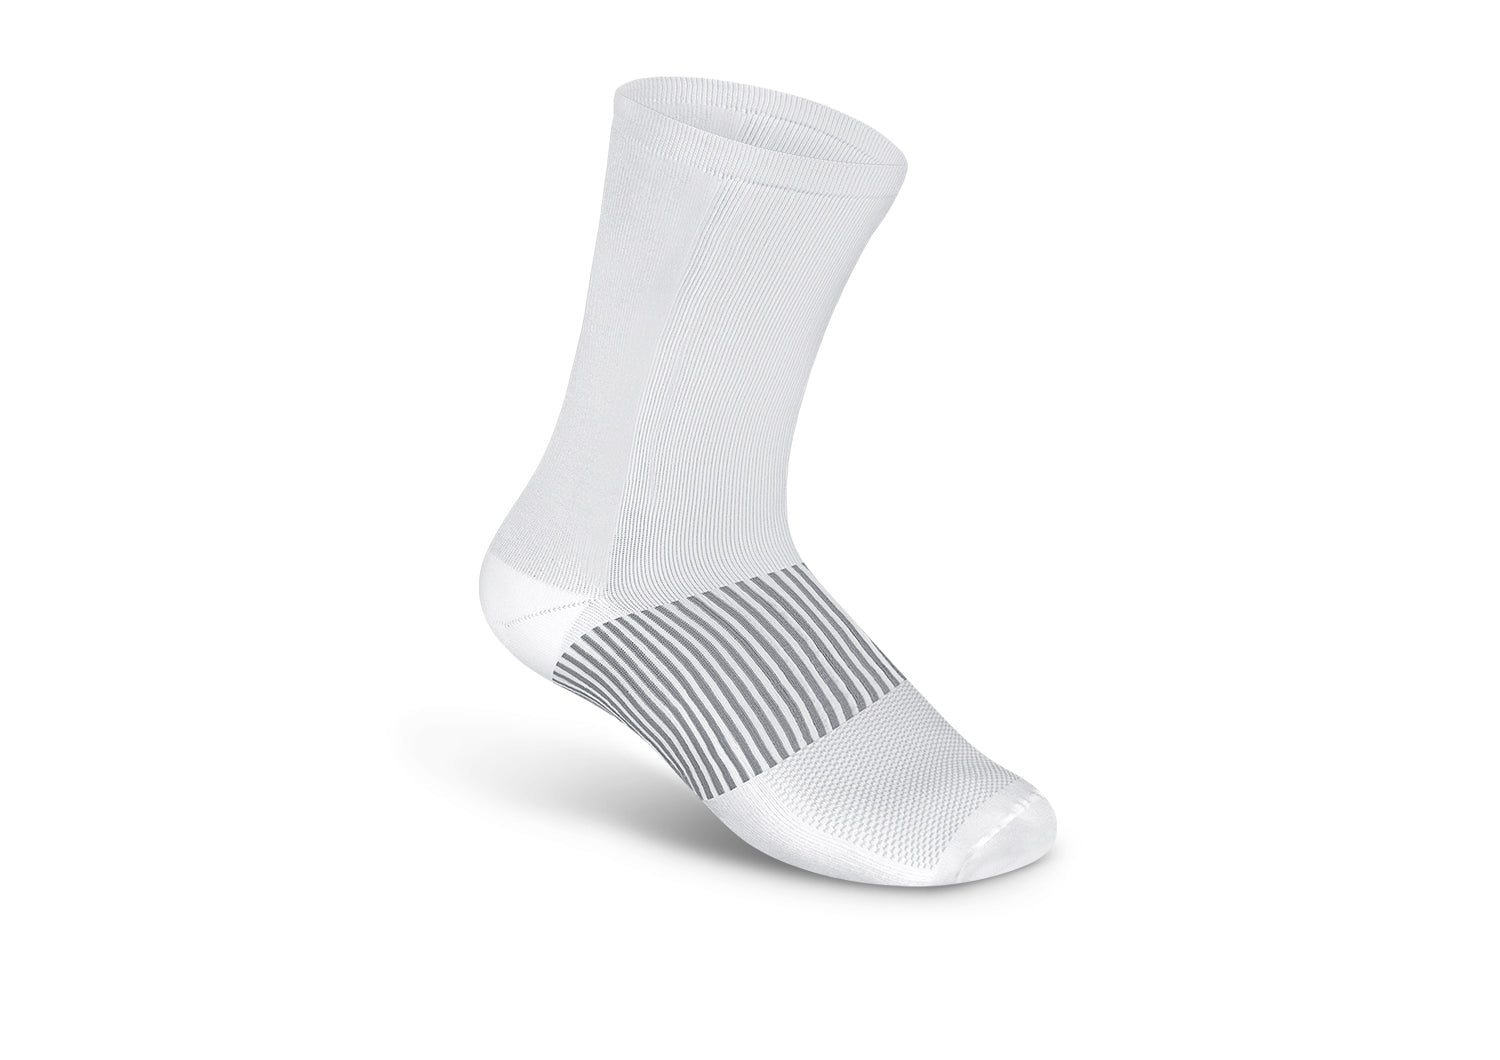 Mid Compression Socks V2.0 - White Black, Sport socks